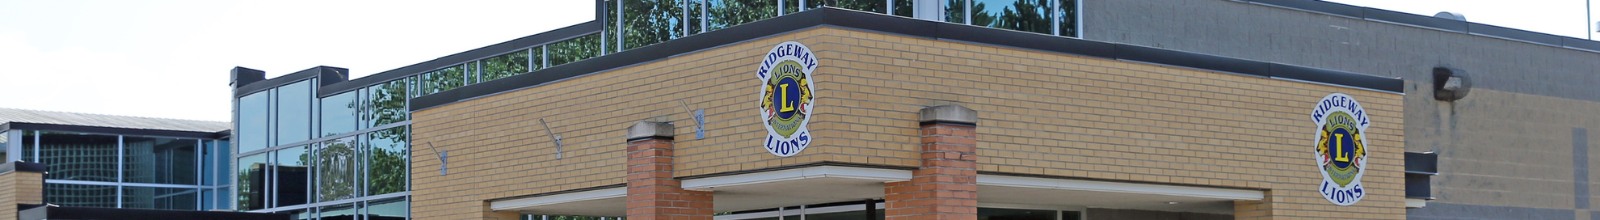 Exteriors of the a Ridgeway Lions organization 